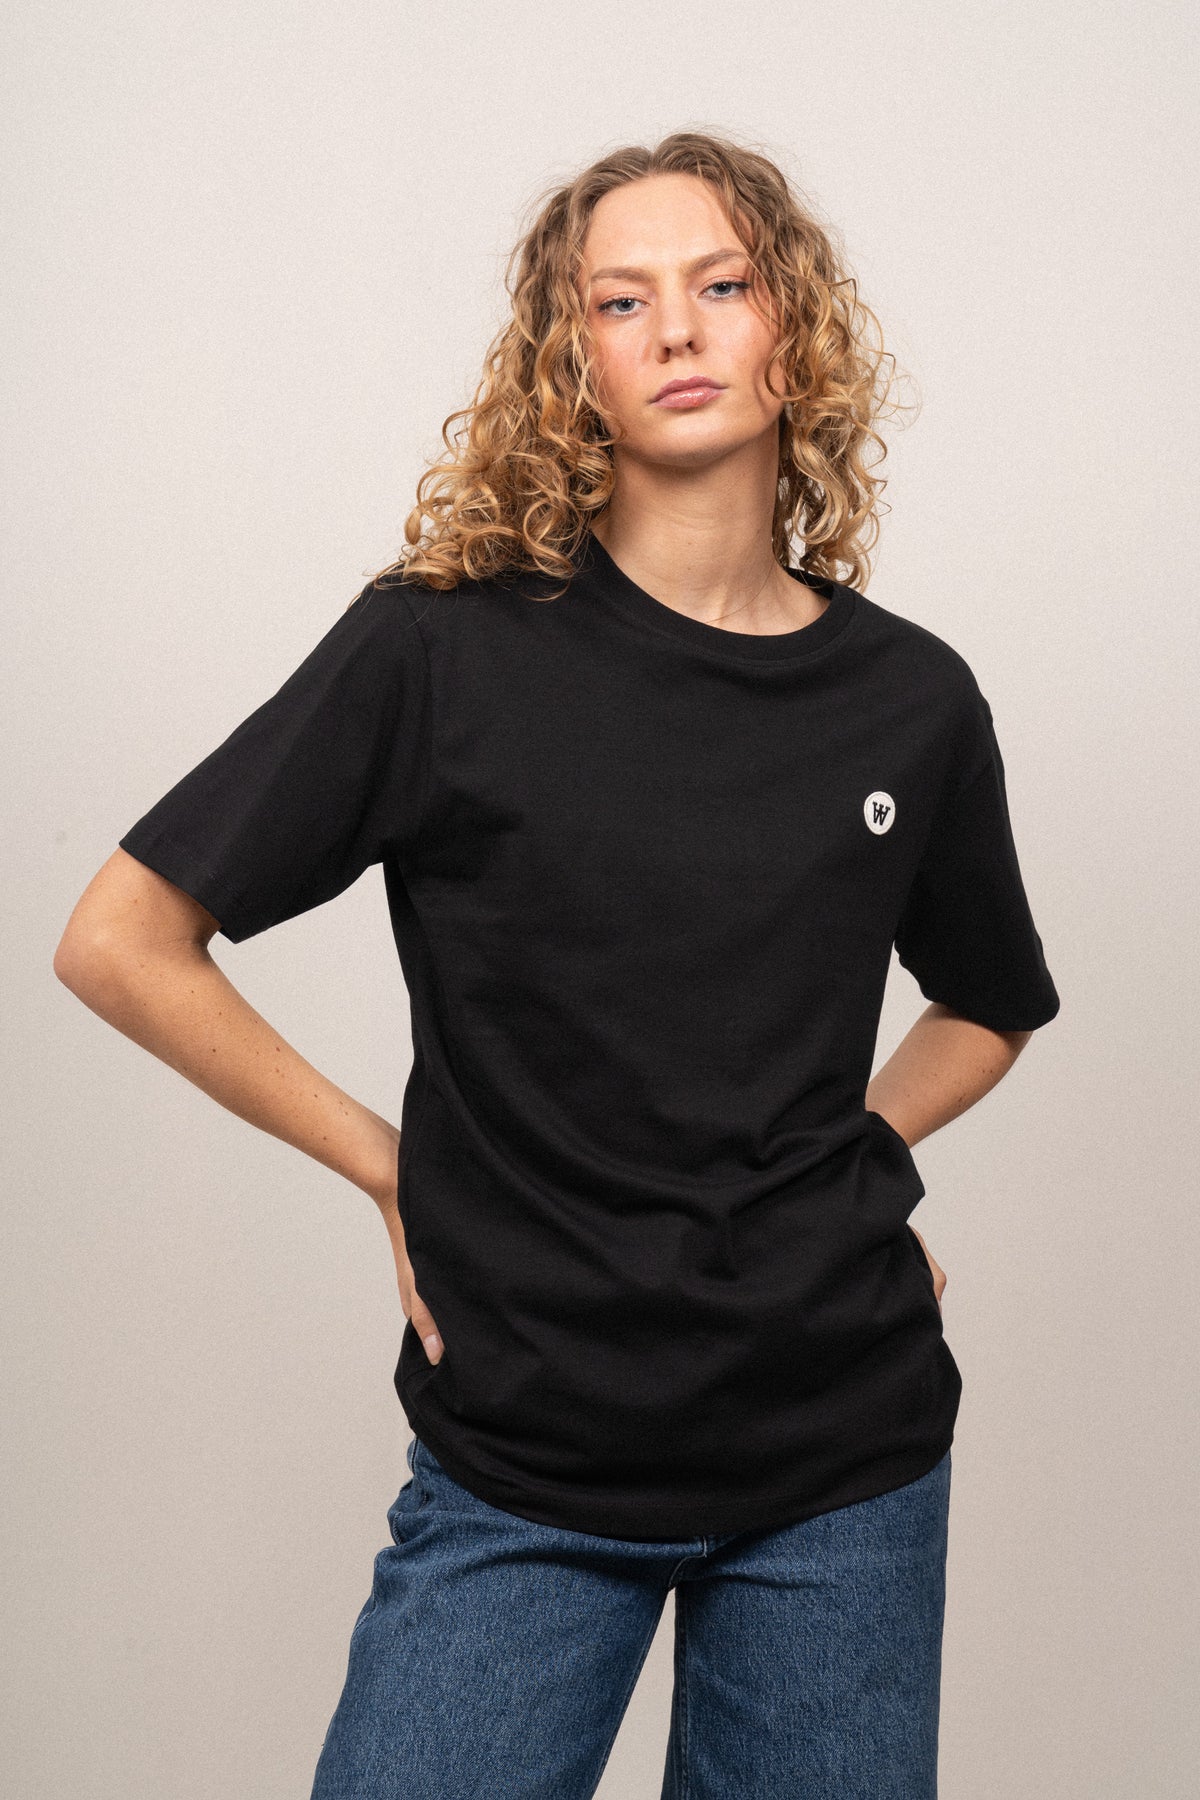 Ace Badge T-Shirt - Black